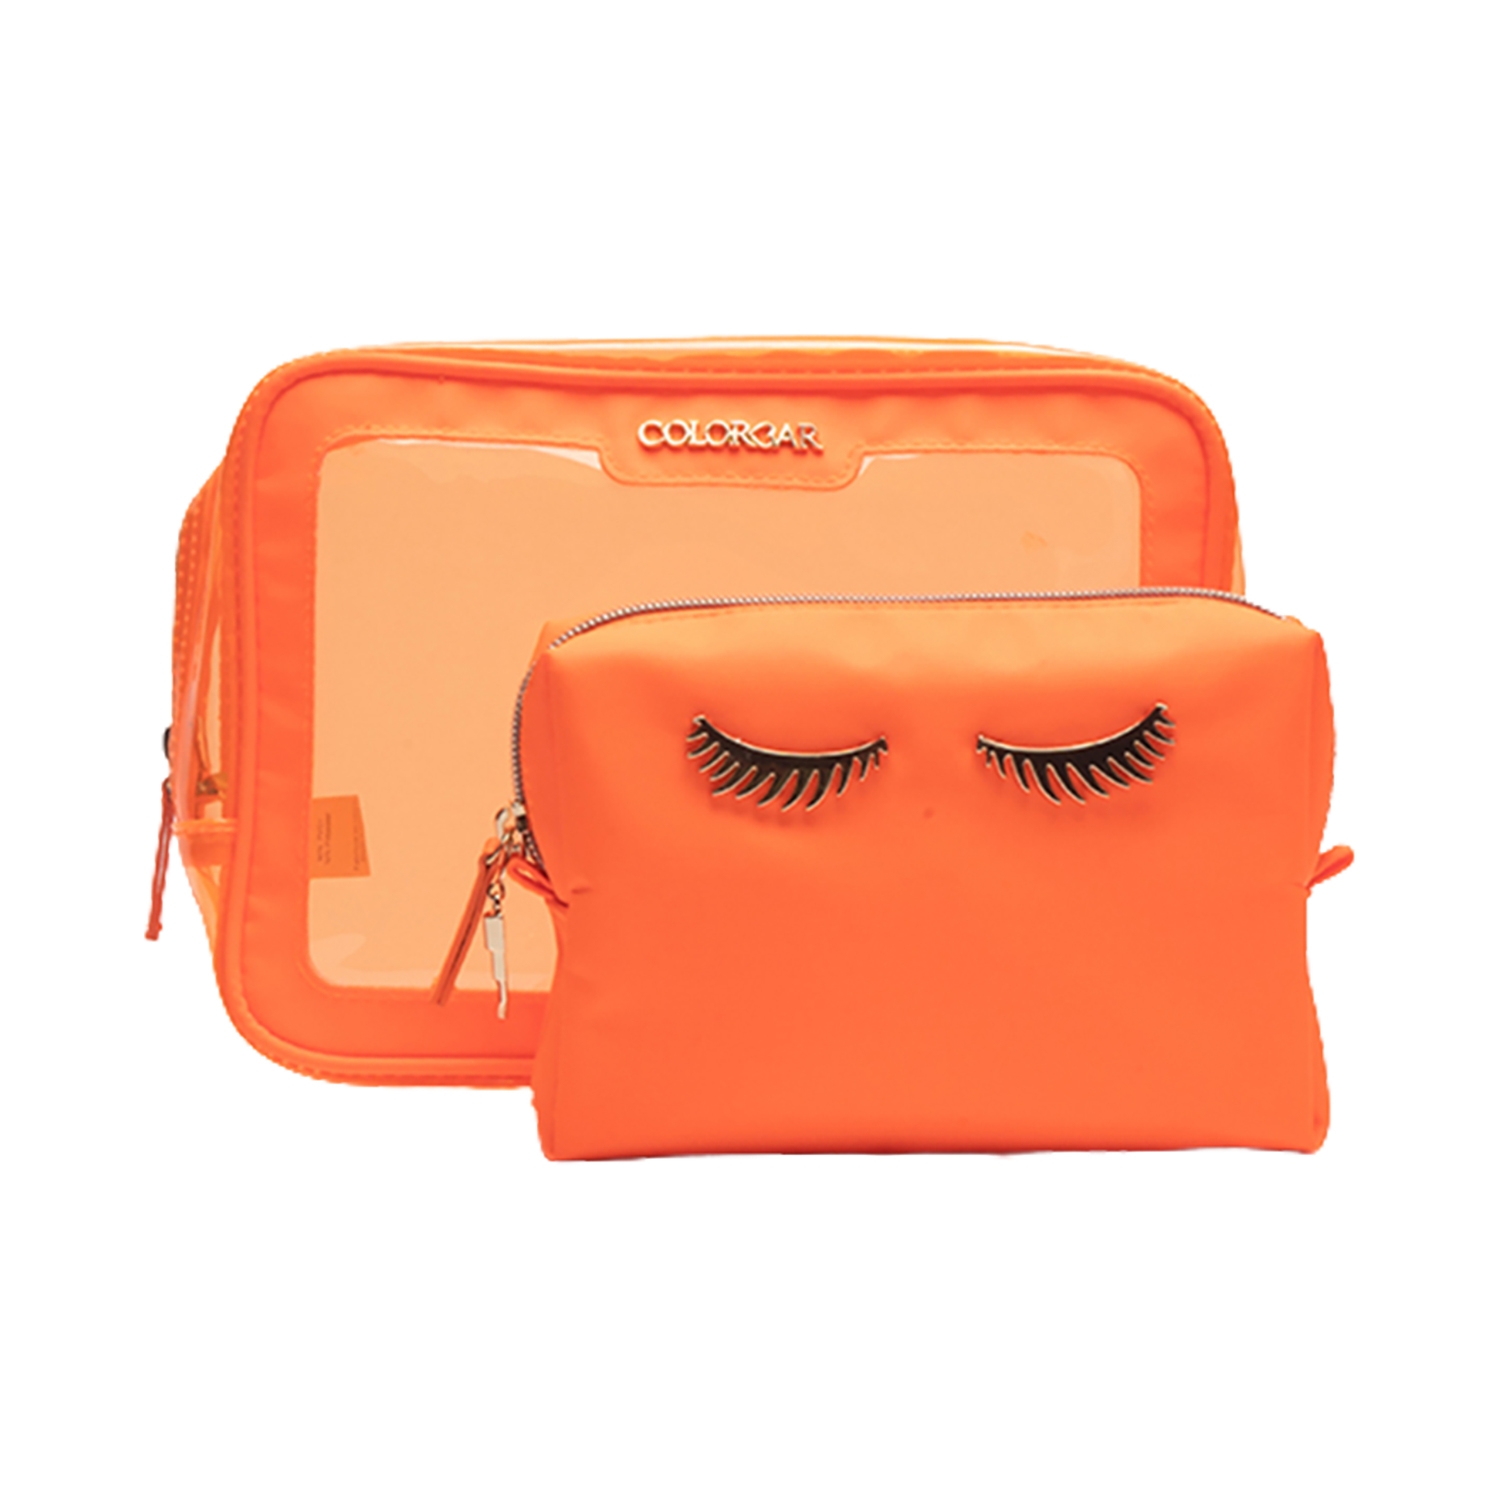 Colorbar | Colorbar Lips & Lashes Box Pouch - Neon Orange (2Pcs)